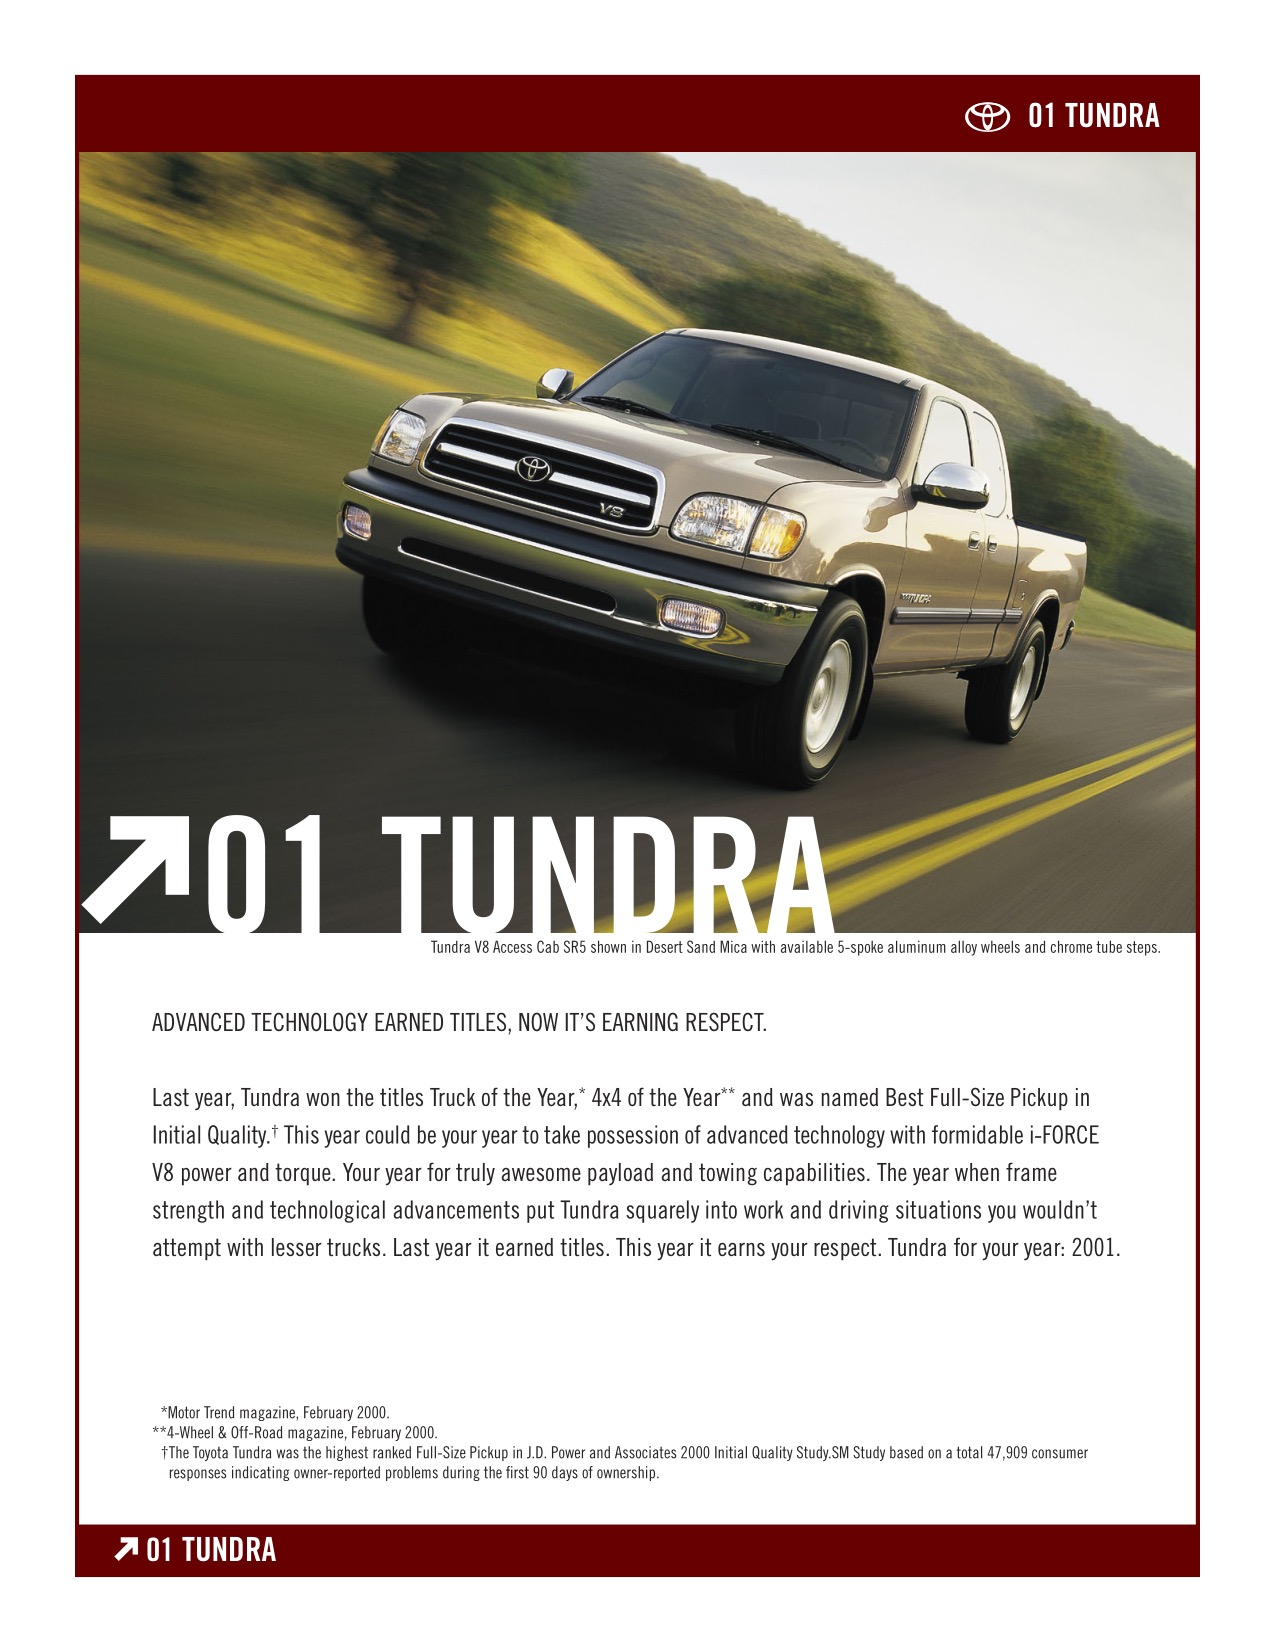 2001 Toyota Tundra Brochure